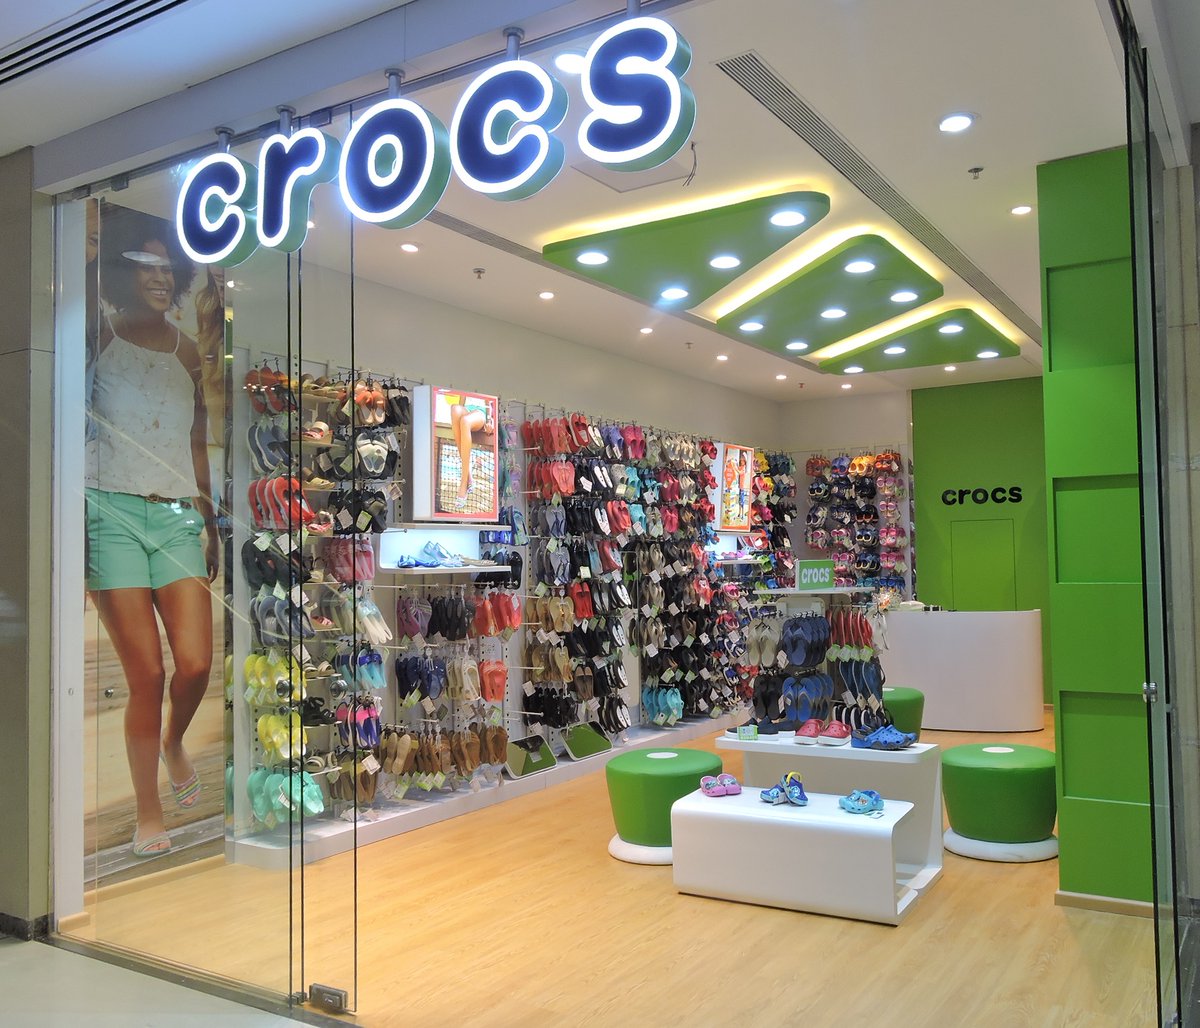 Crocs Korum Mall Thane West Mumbai